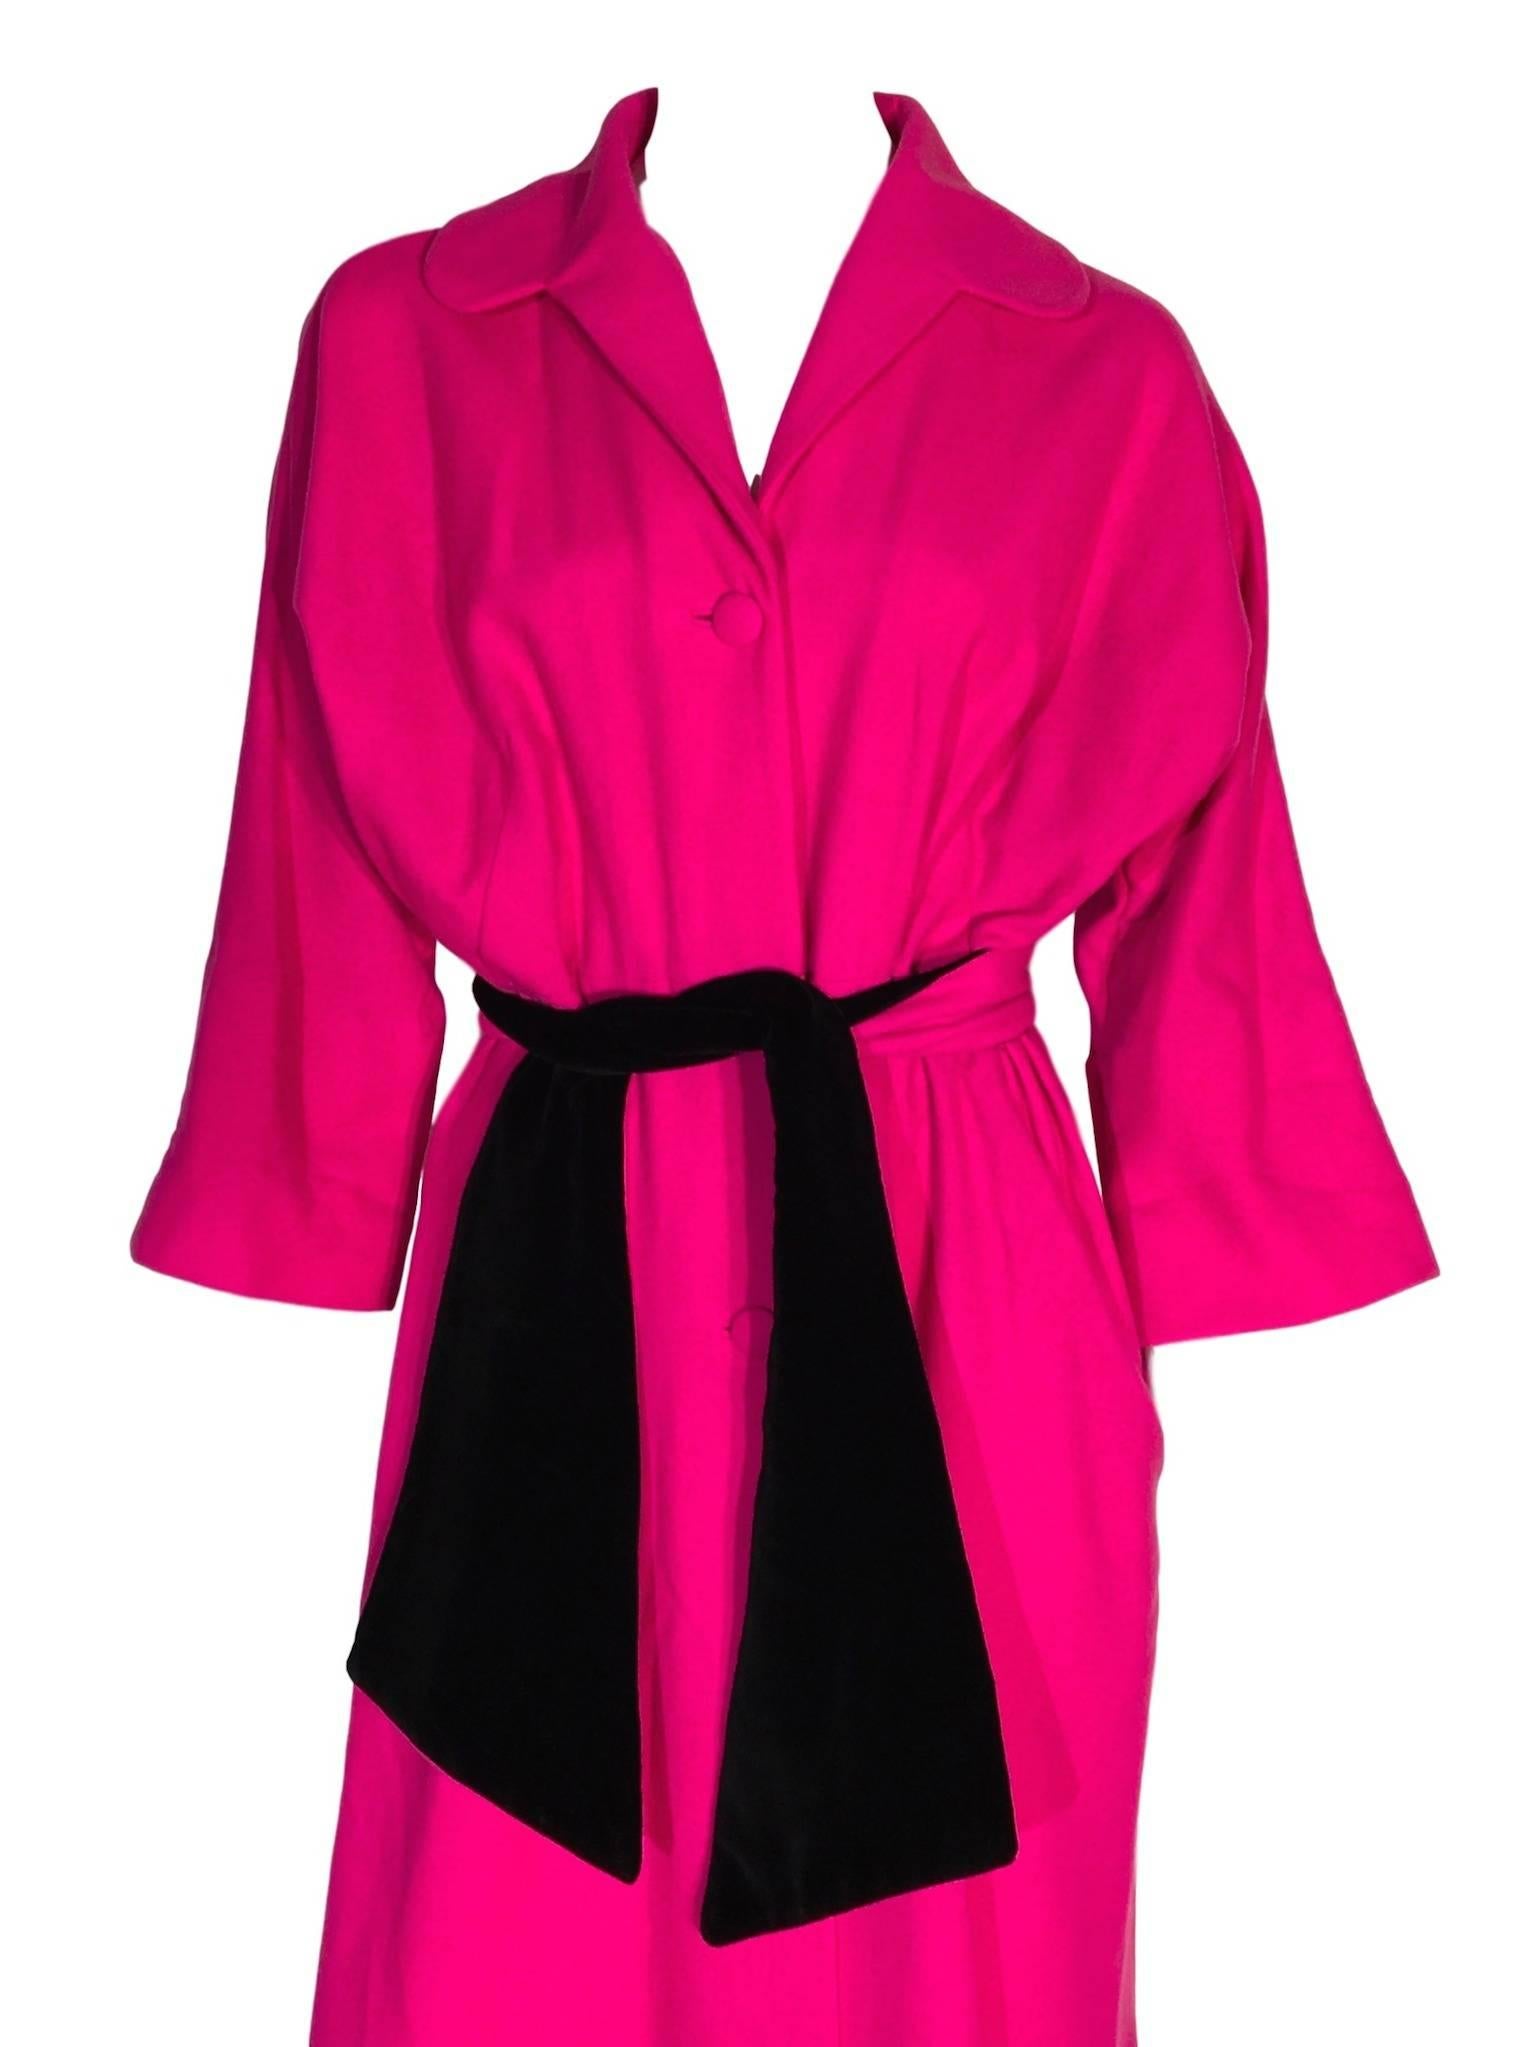 Red Vintage Pure Wool Wrap style Coat 1950s Pink Black Velvet Sash Kendal Milne UK For Sale